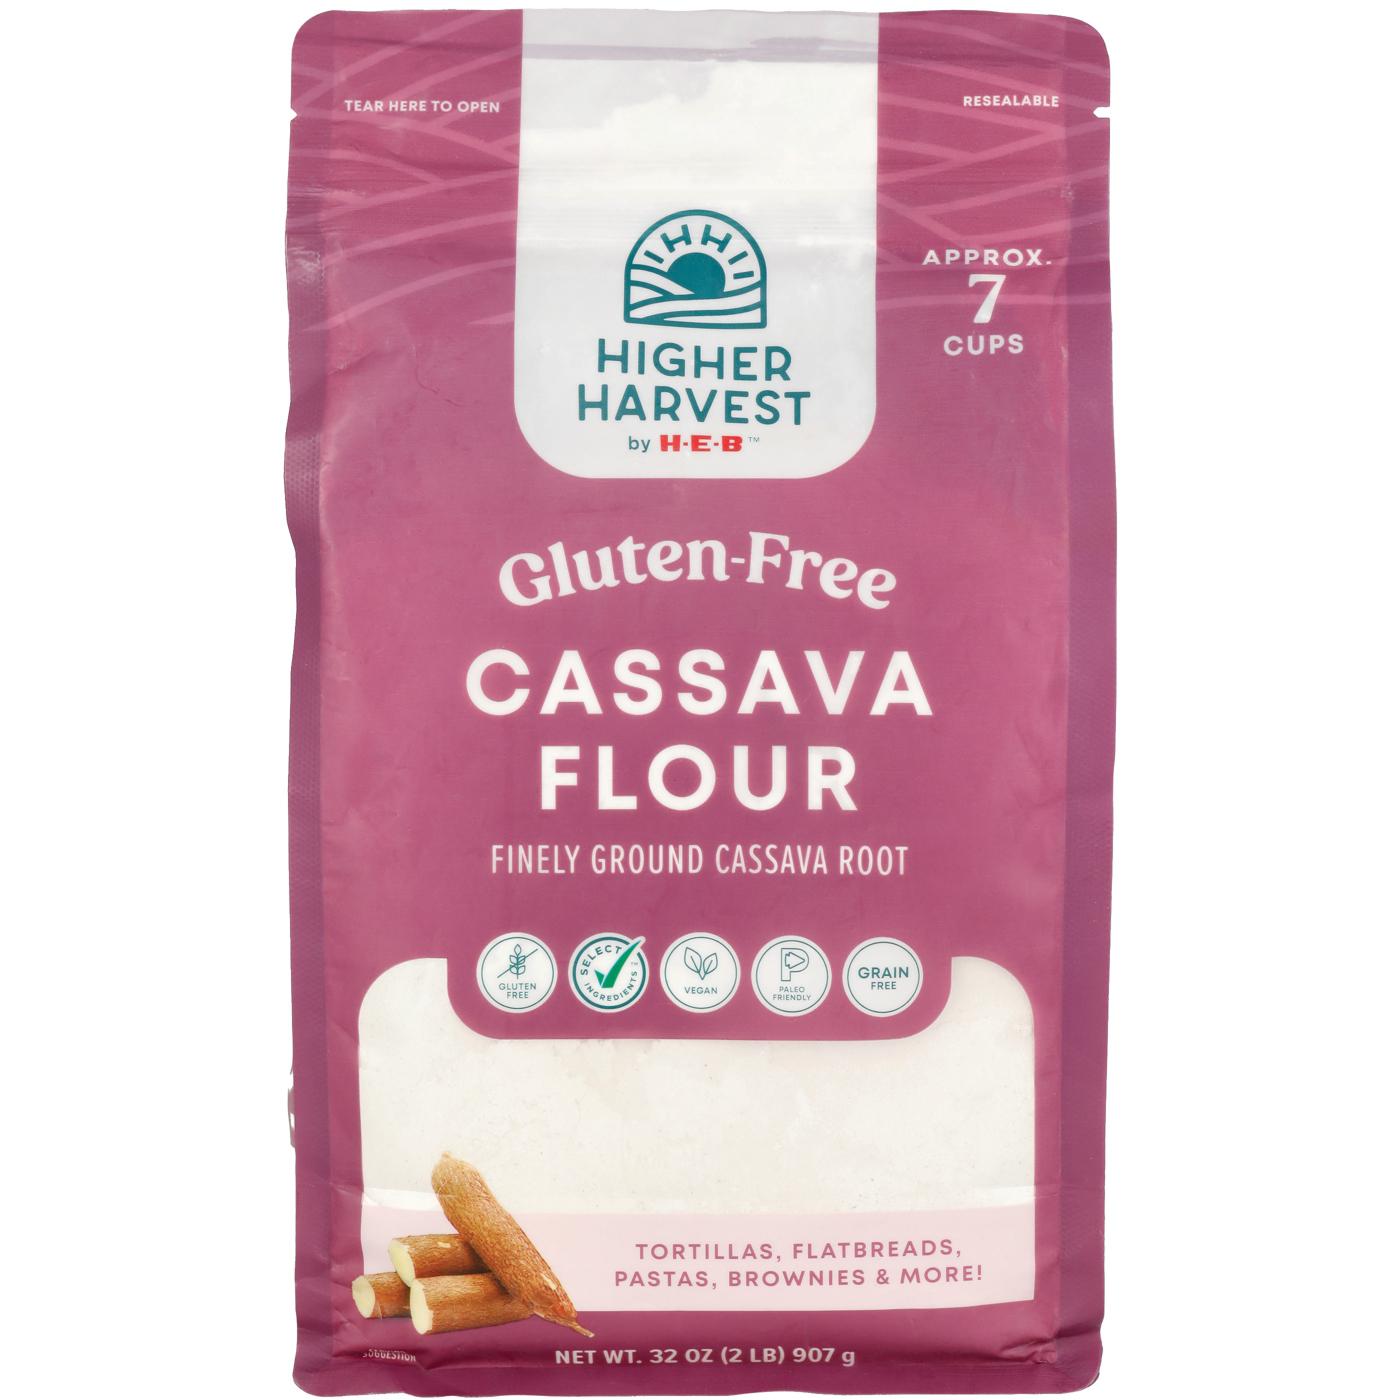 Higher Harvest by H-E-B Gluten-Free Cassava Flour; image 1 of 2